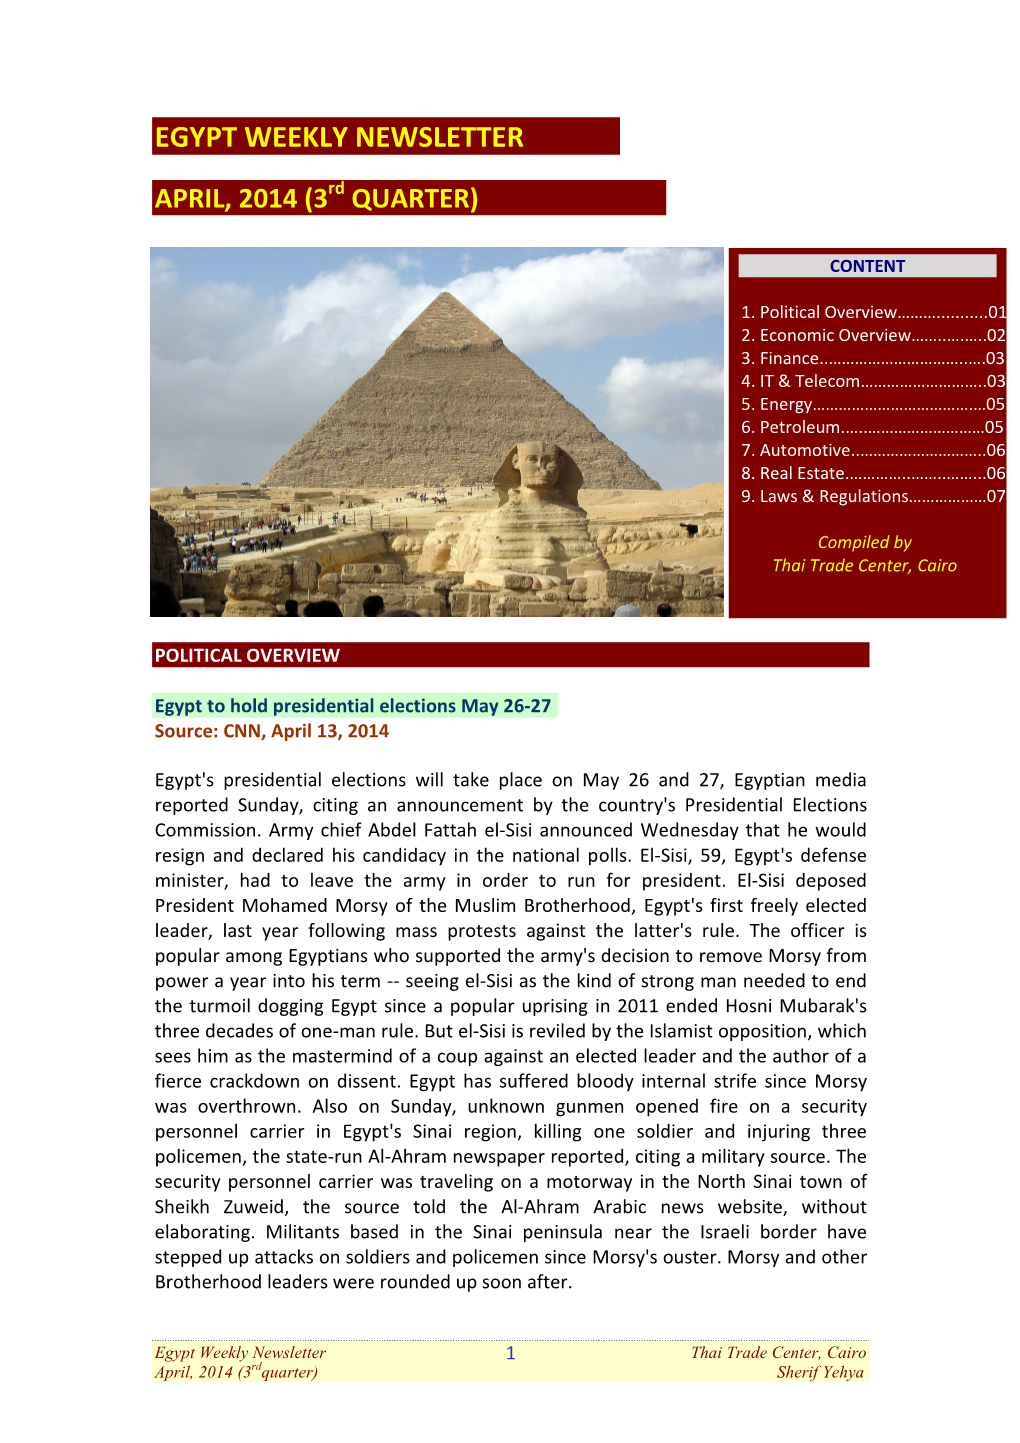 Egypt Weekly Newsletter April 2014, 3Rd Quarter